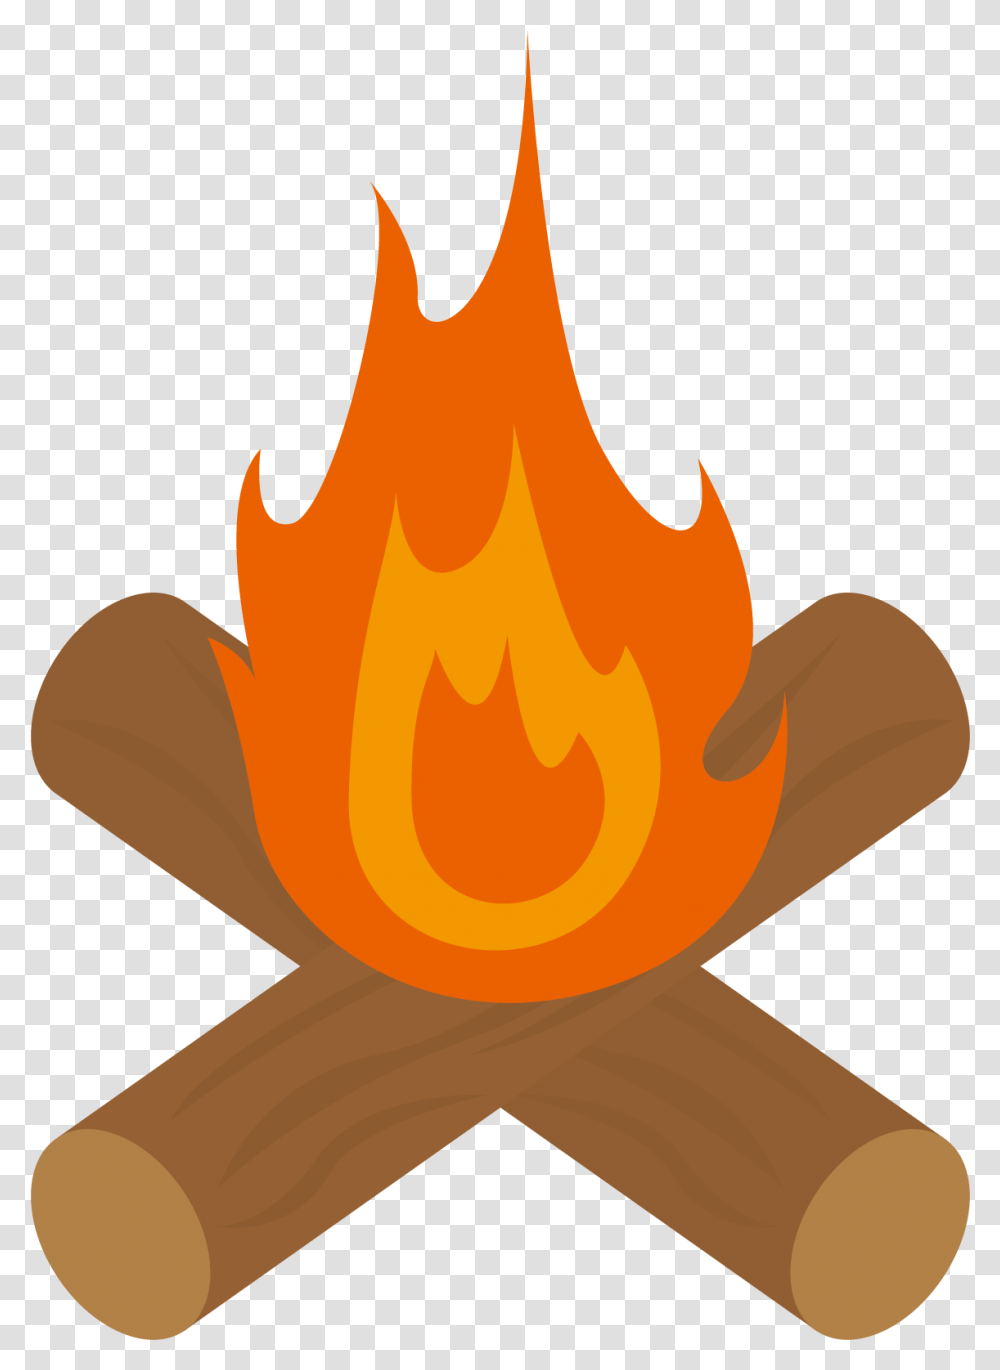 Bonfire Firewood Clip Art A Bonfire Of Firewood Fire With Wood Clipart, Flame Transparent Png